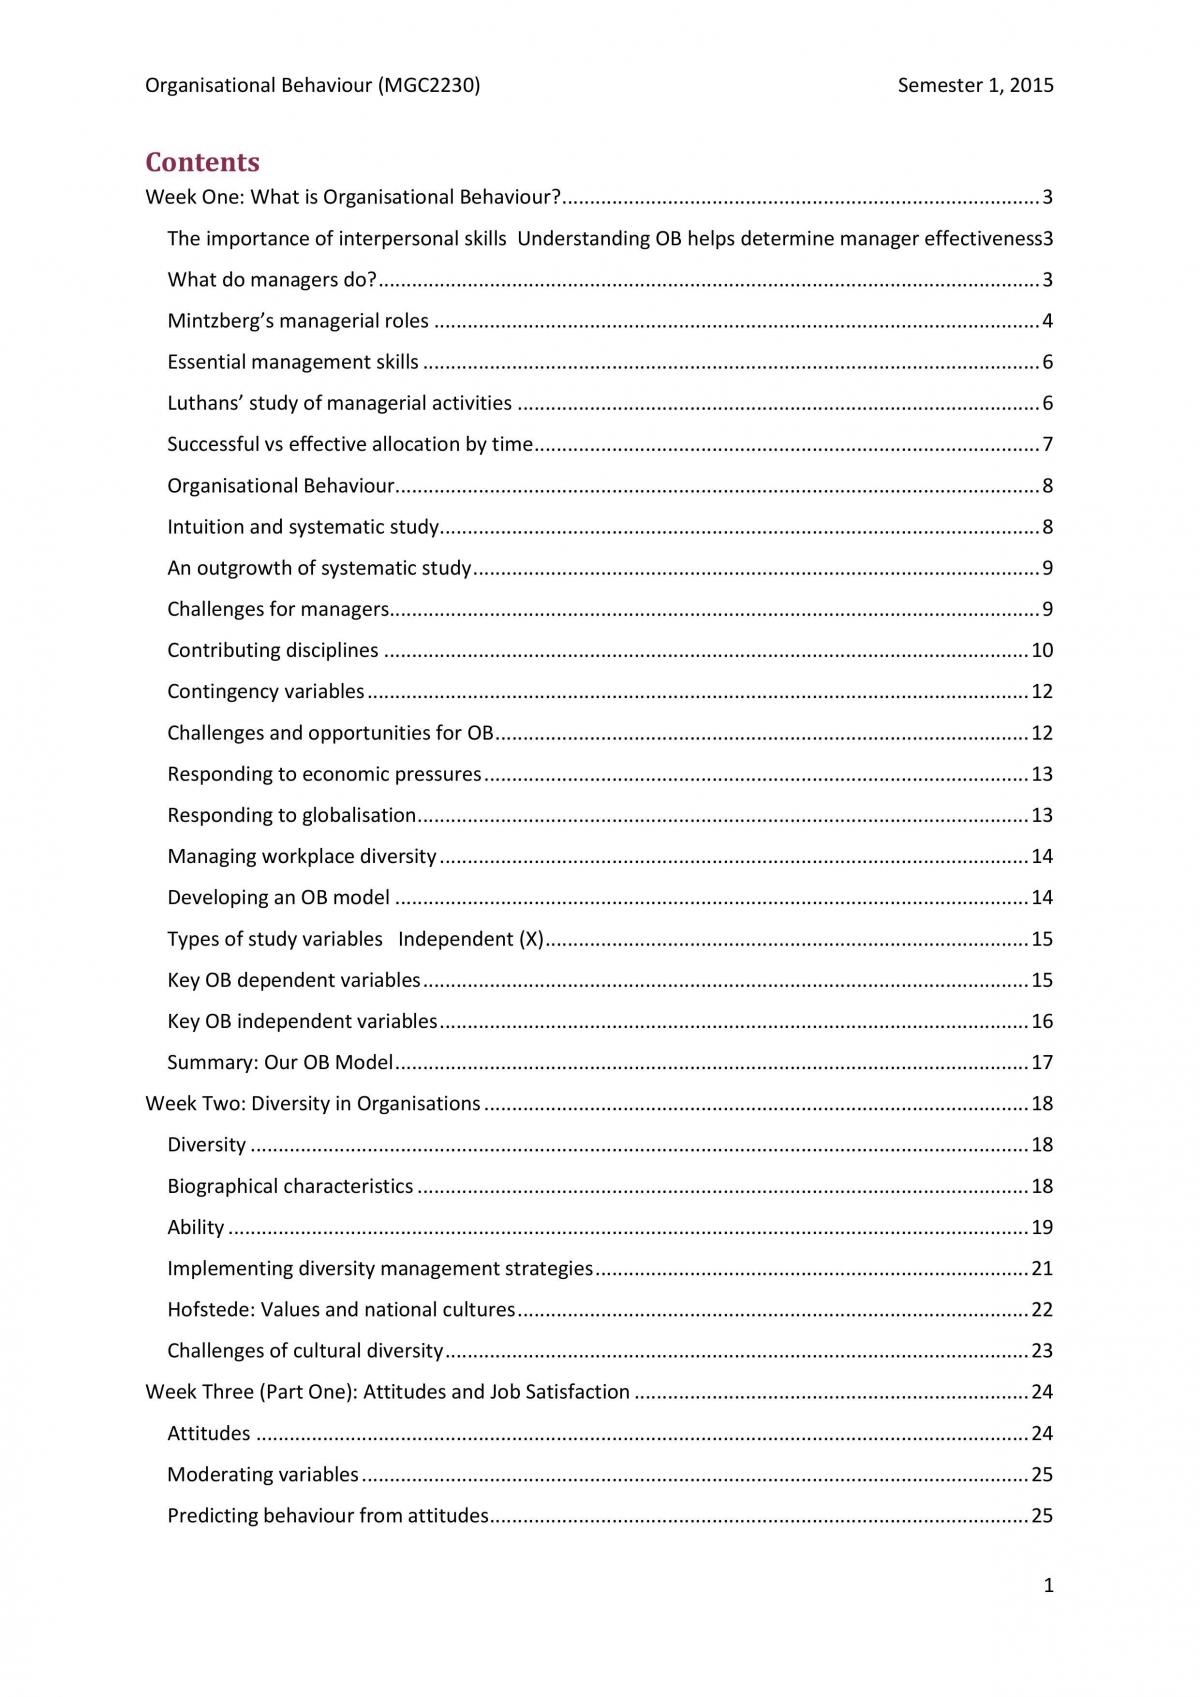 MGC2230 Organisational Behaviour Full Study Notes - Page 2